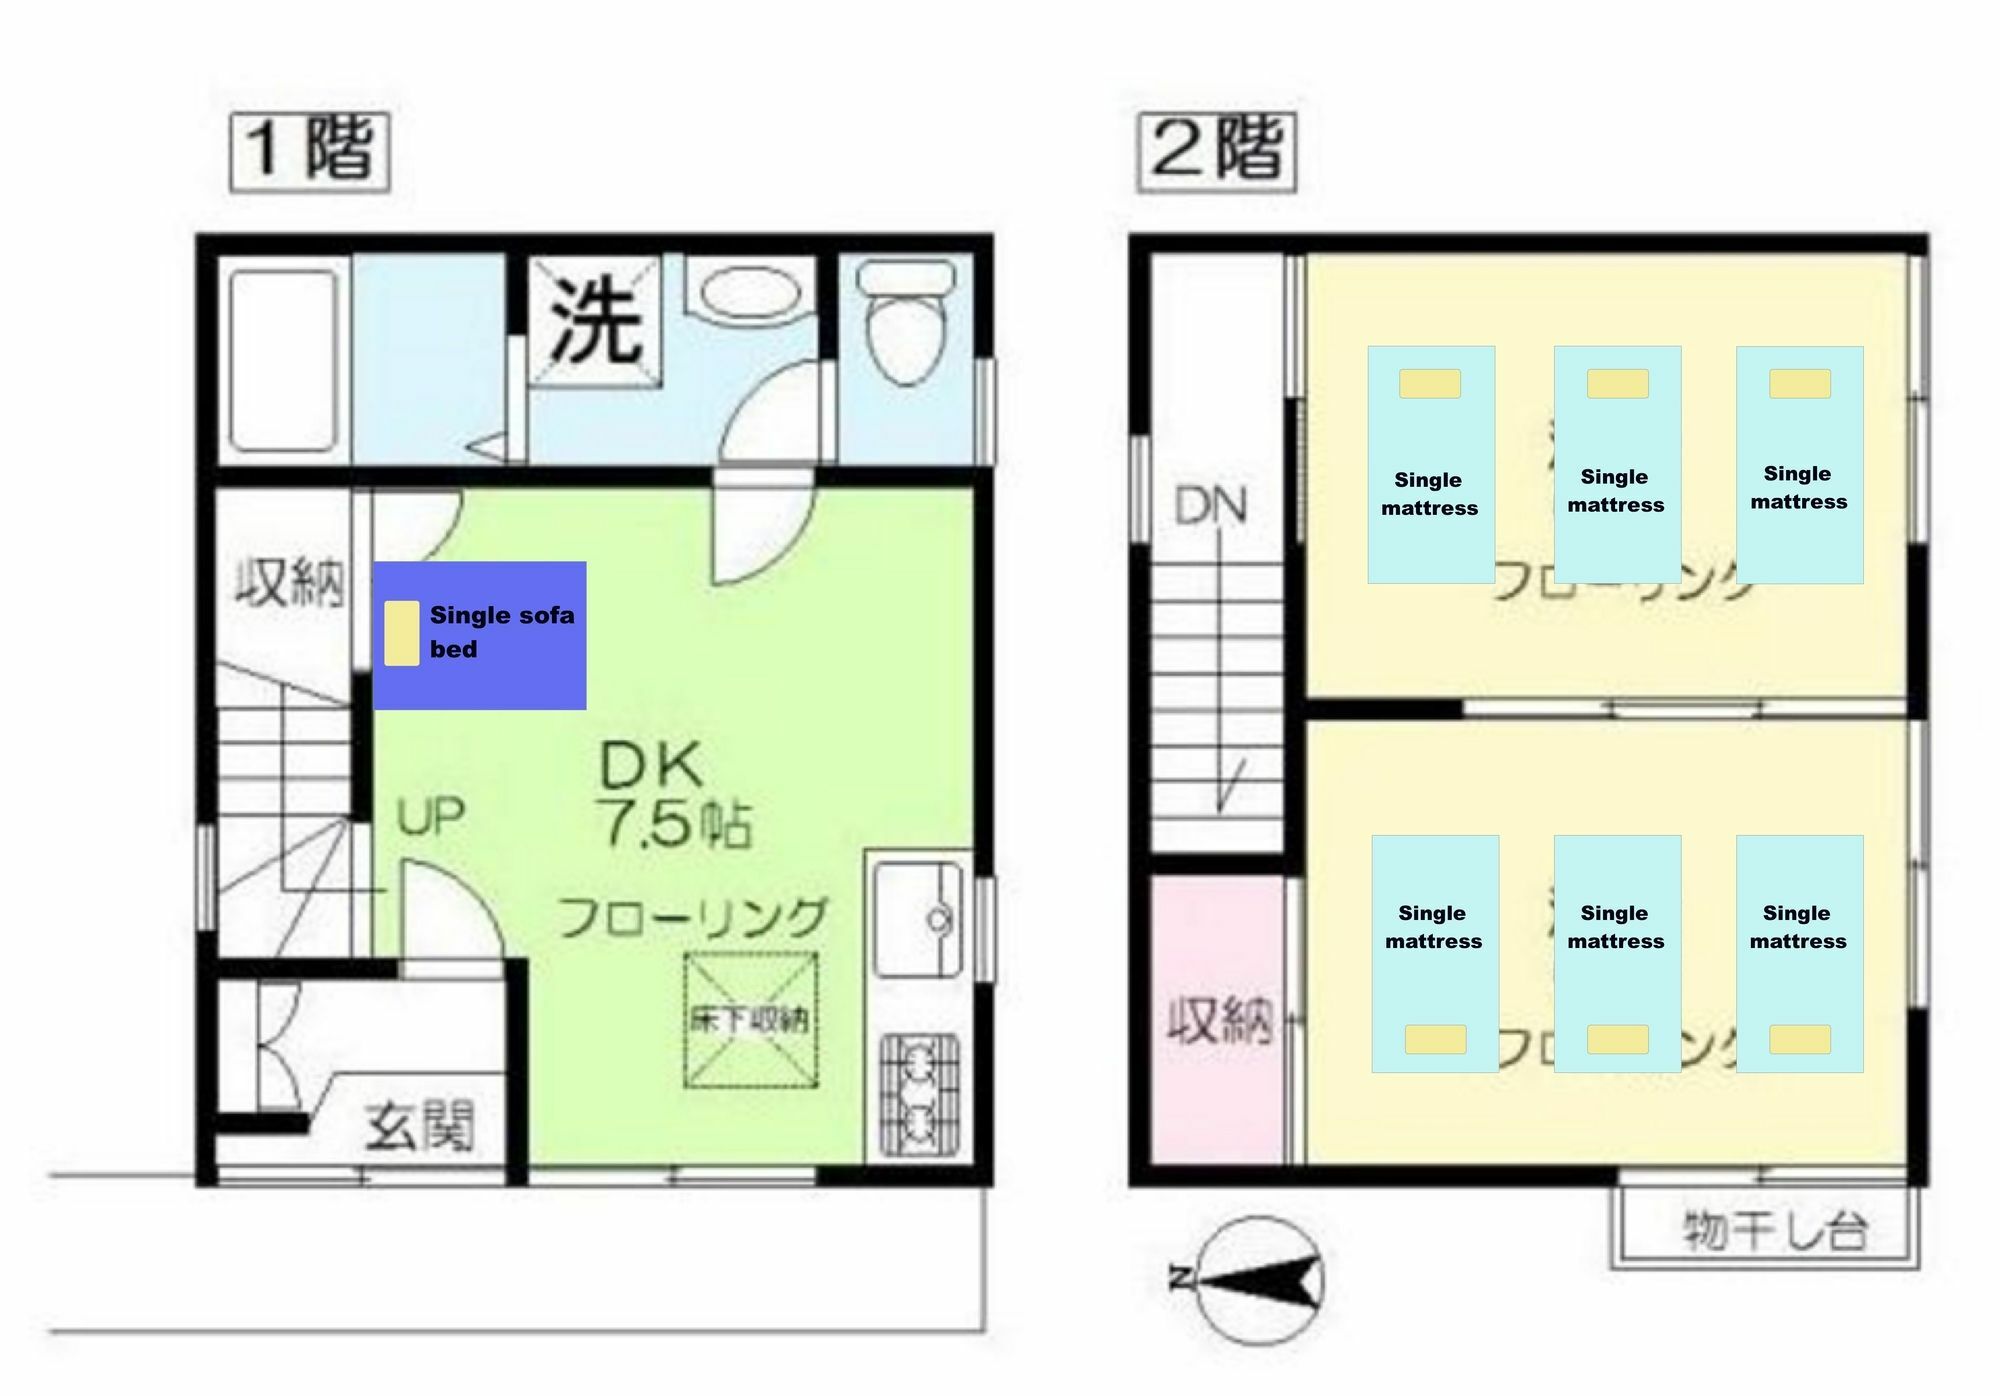 M'S House01 Kamata/Haneda 東京都 エクステリア 写真